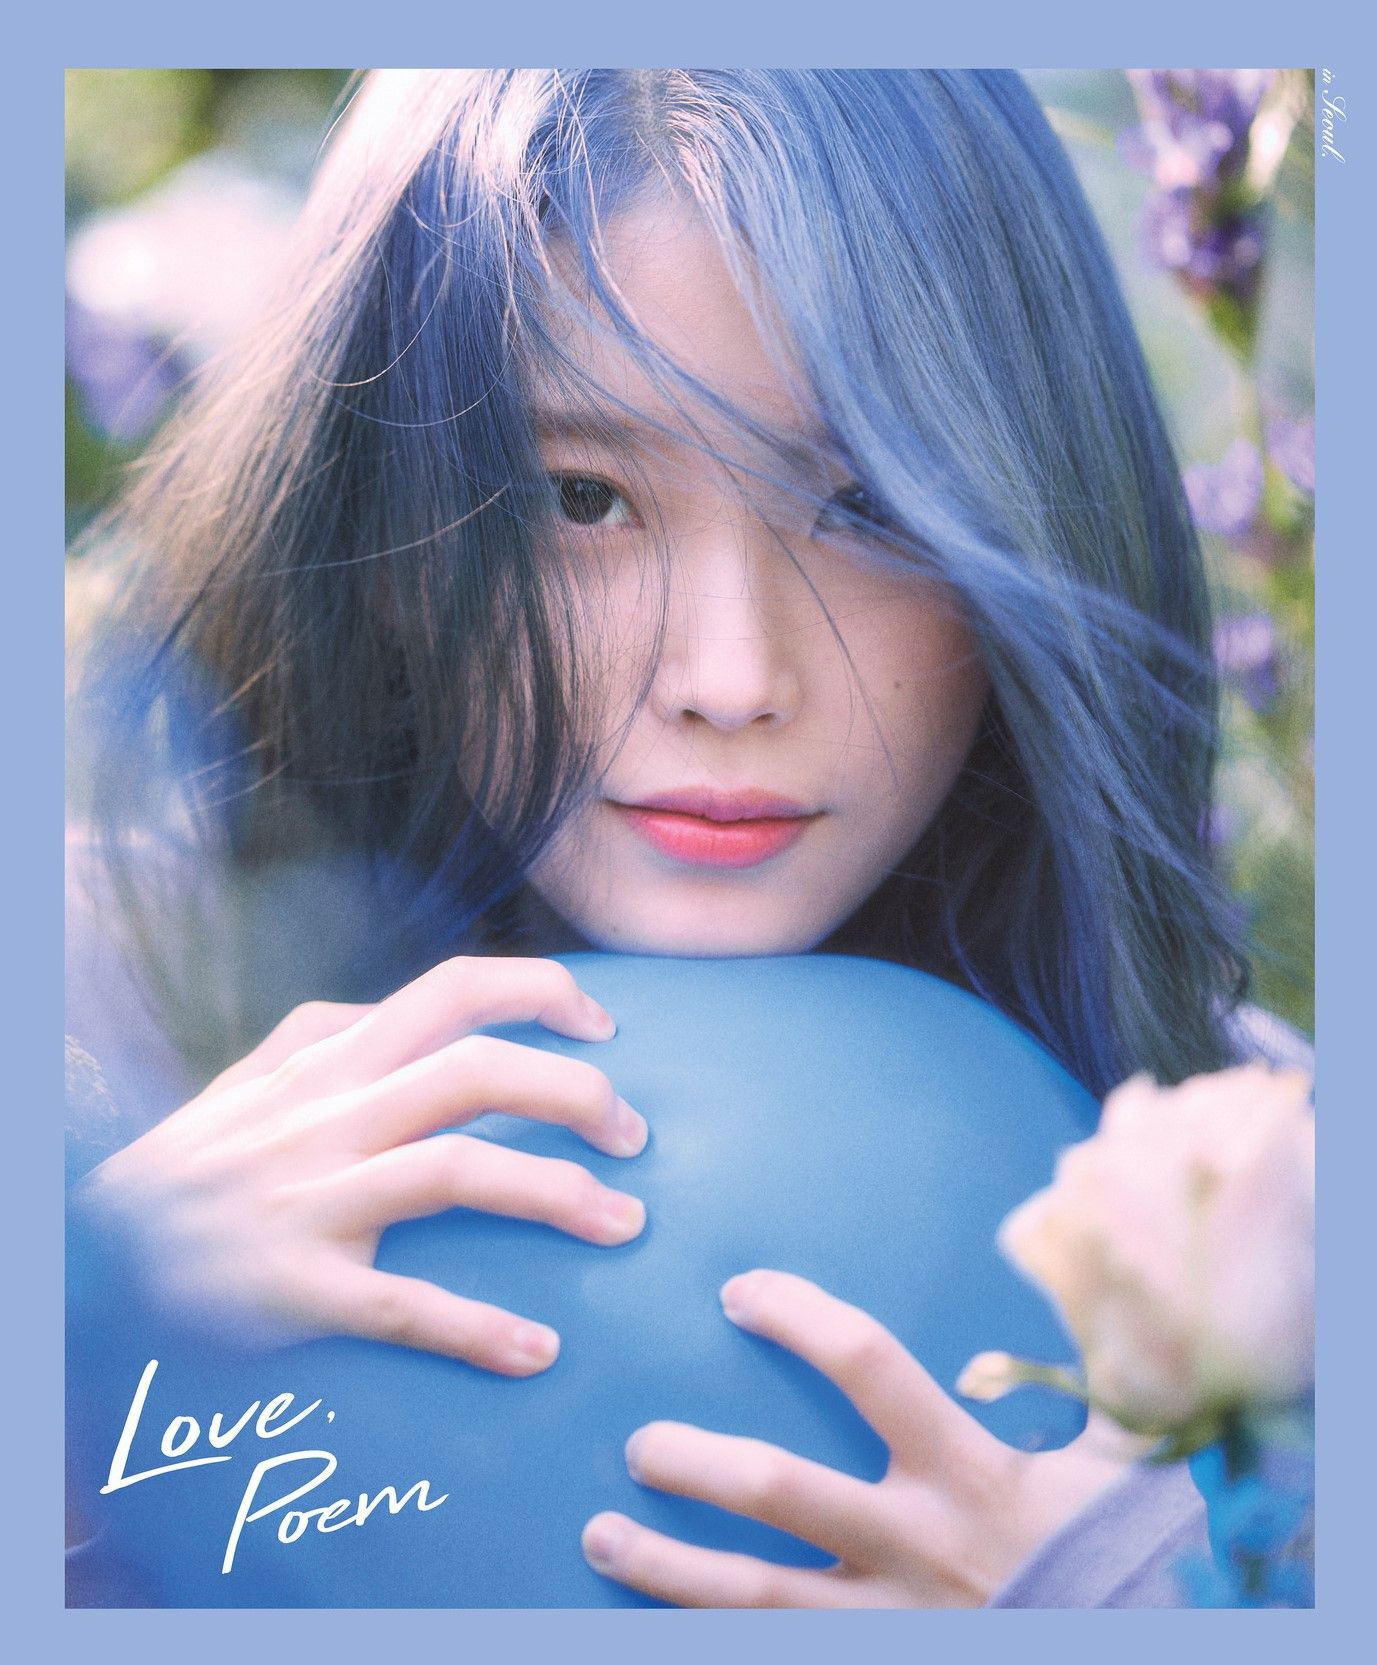 IU 〈Love,poem〉in Seoul 新品未開封 ブルーレイ - K-POP/アジア